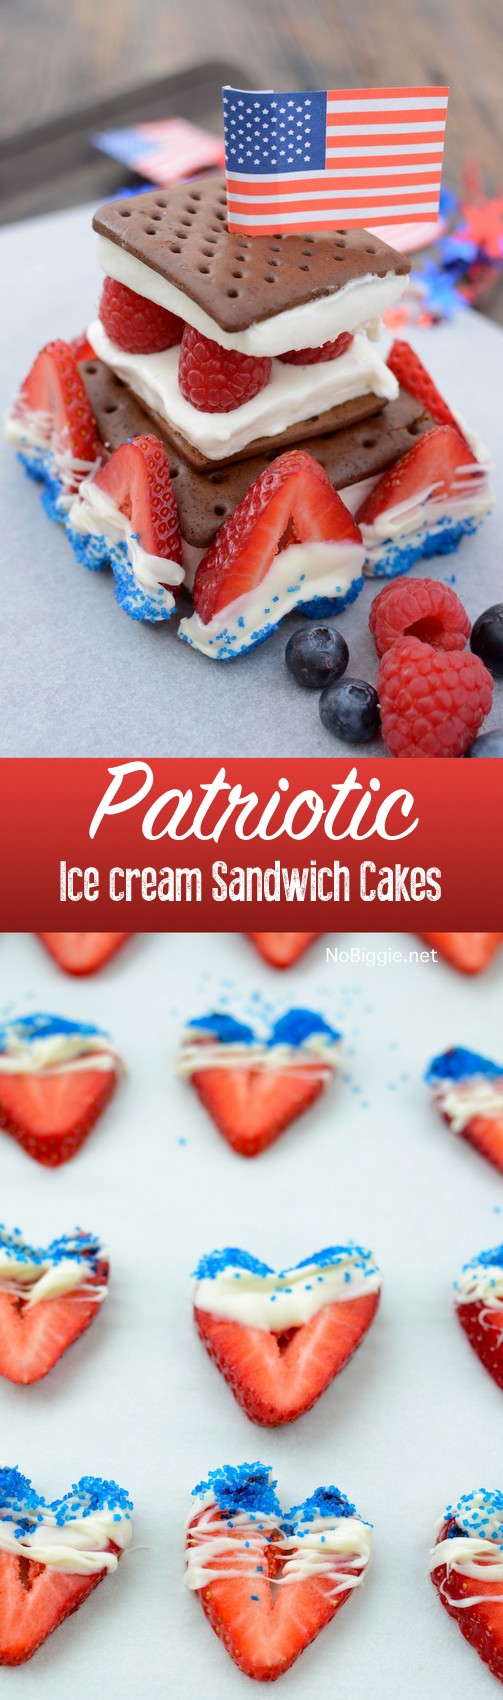 http://www.nobiggie.net/wp-content/uploads/2016/06/Patriotic-Ice-Cream-Sandwiches.jpg